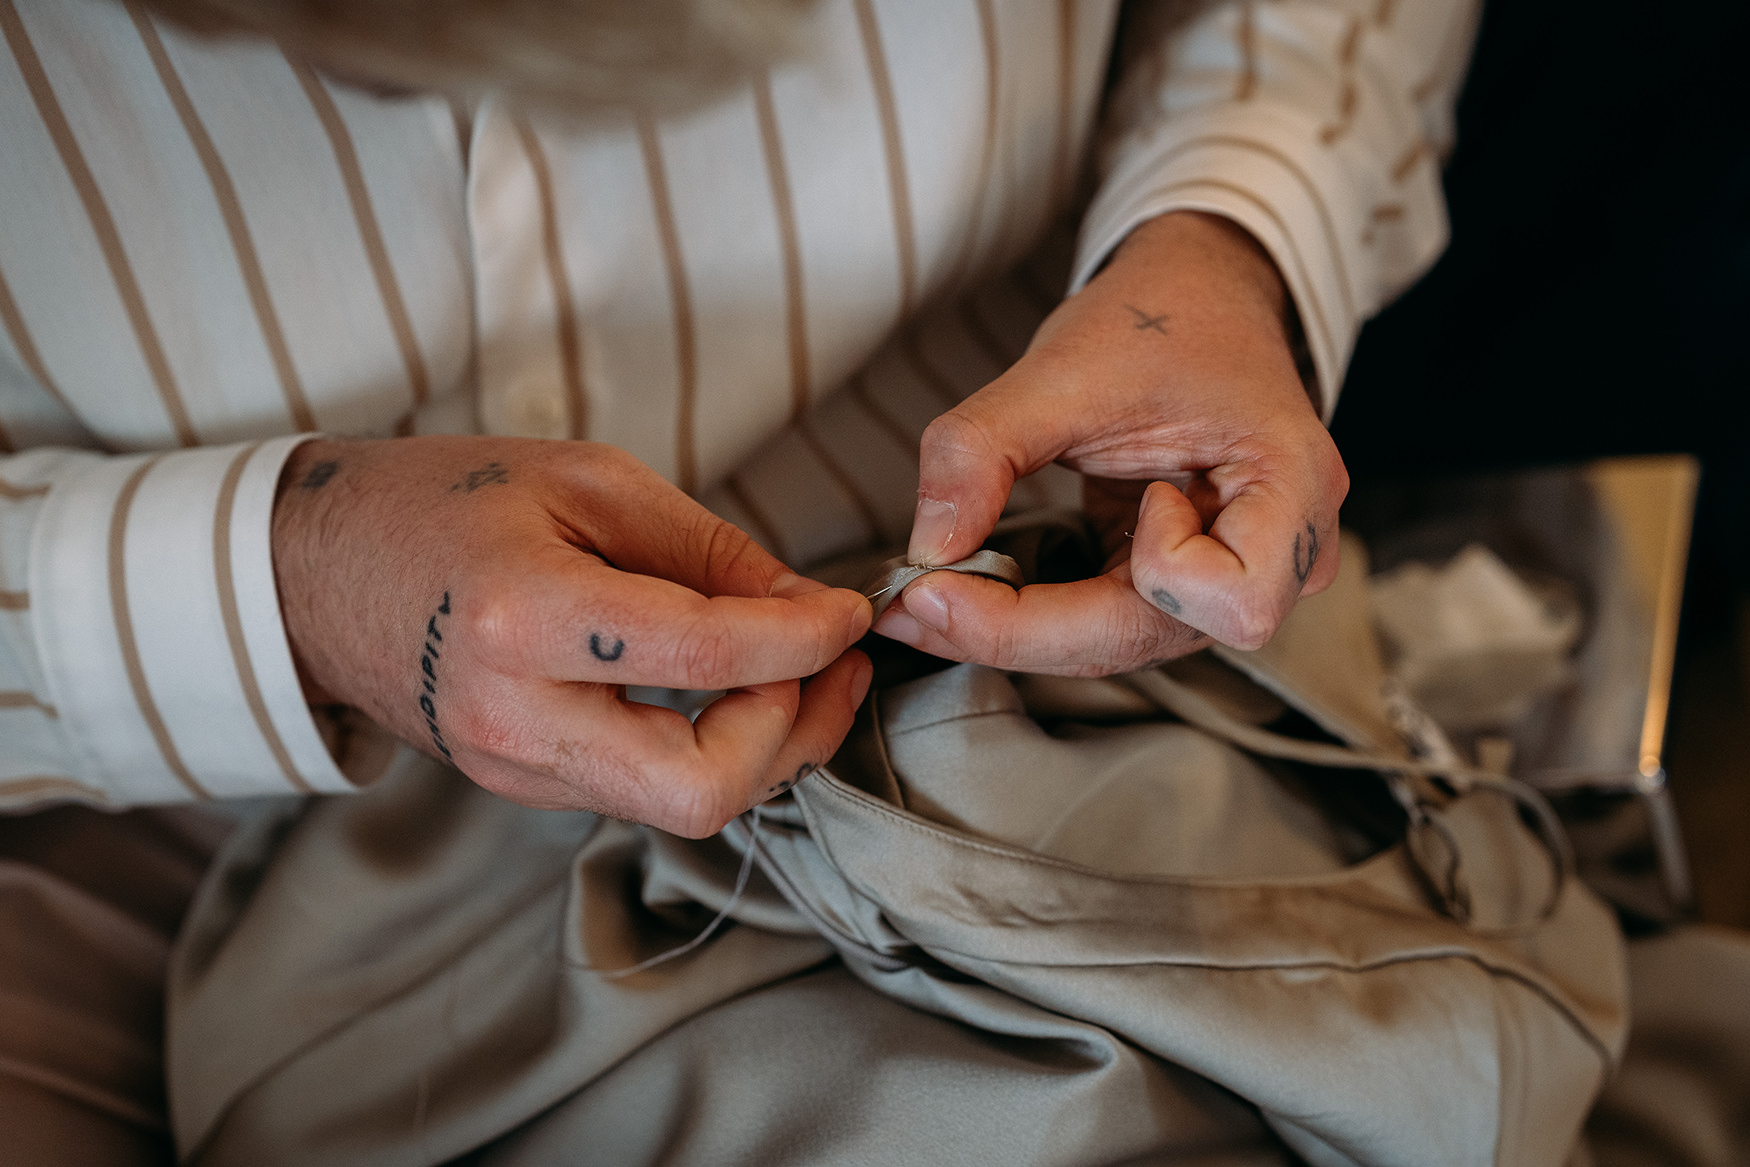 Tattooed hands stitching broken bridesmaid dress on wedding morning using wedding day emergency kit